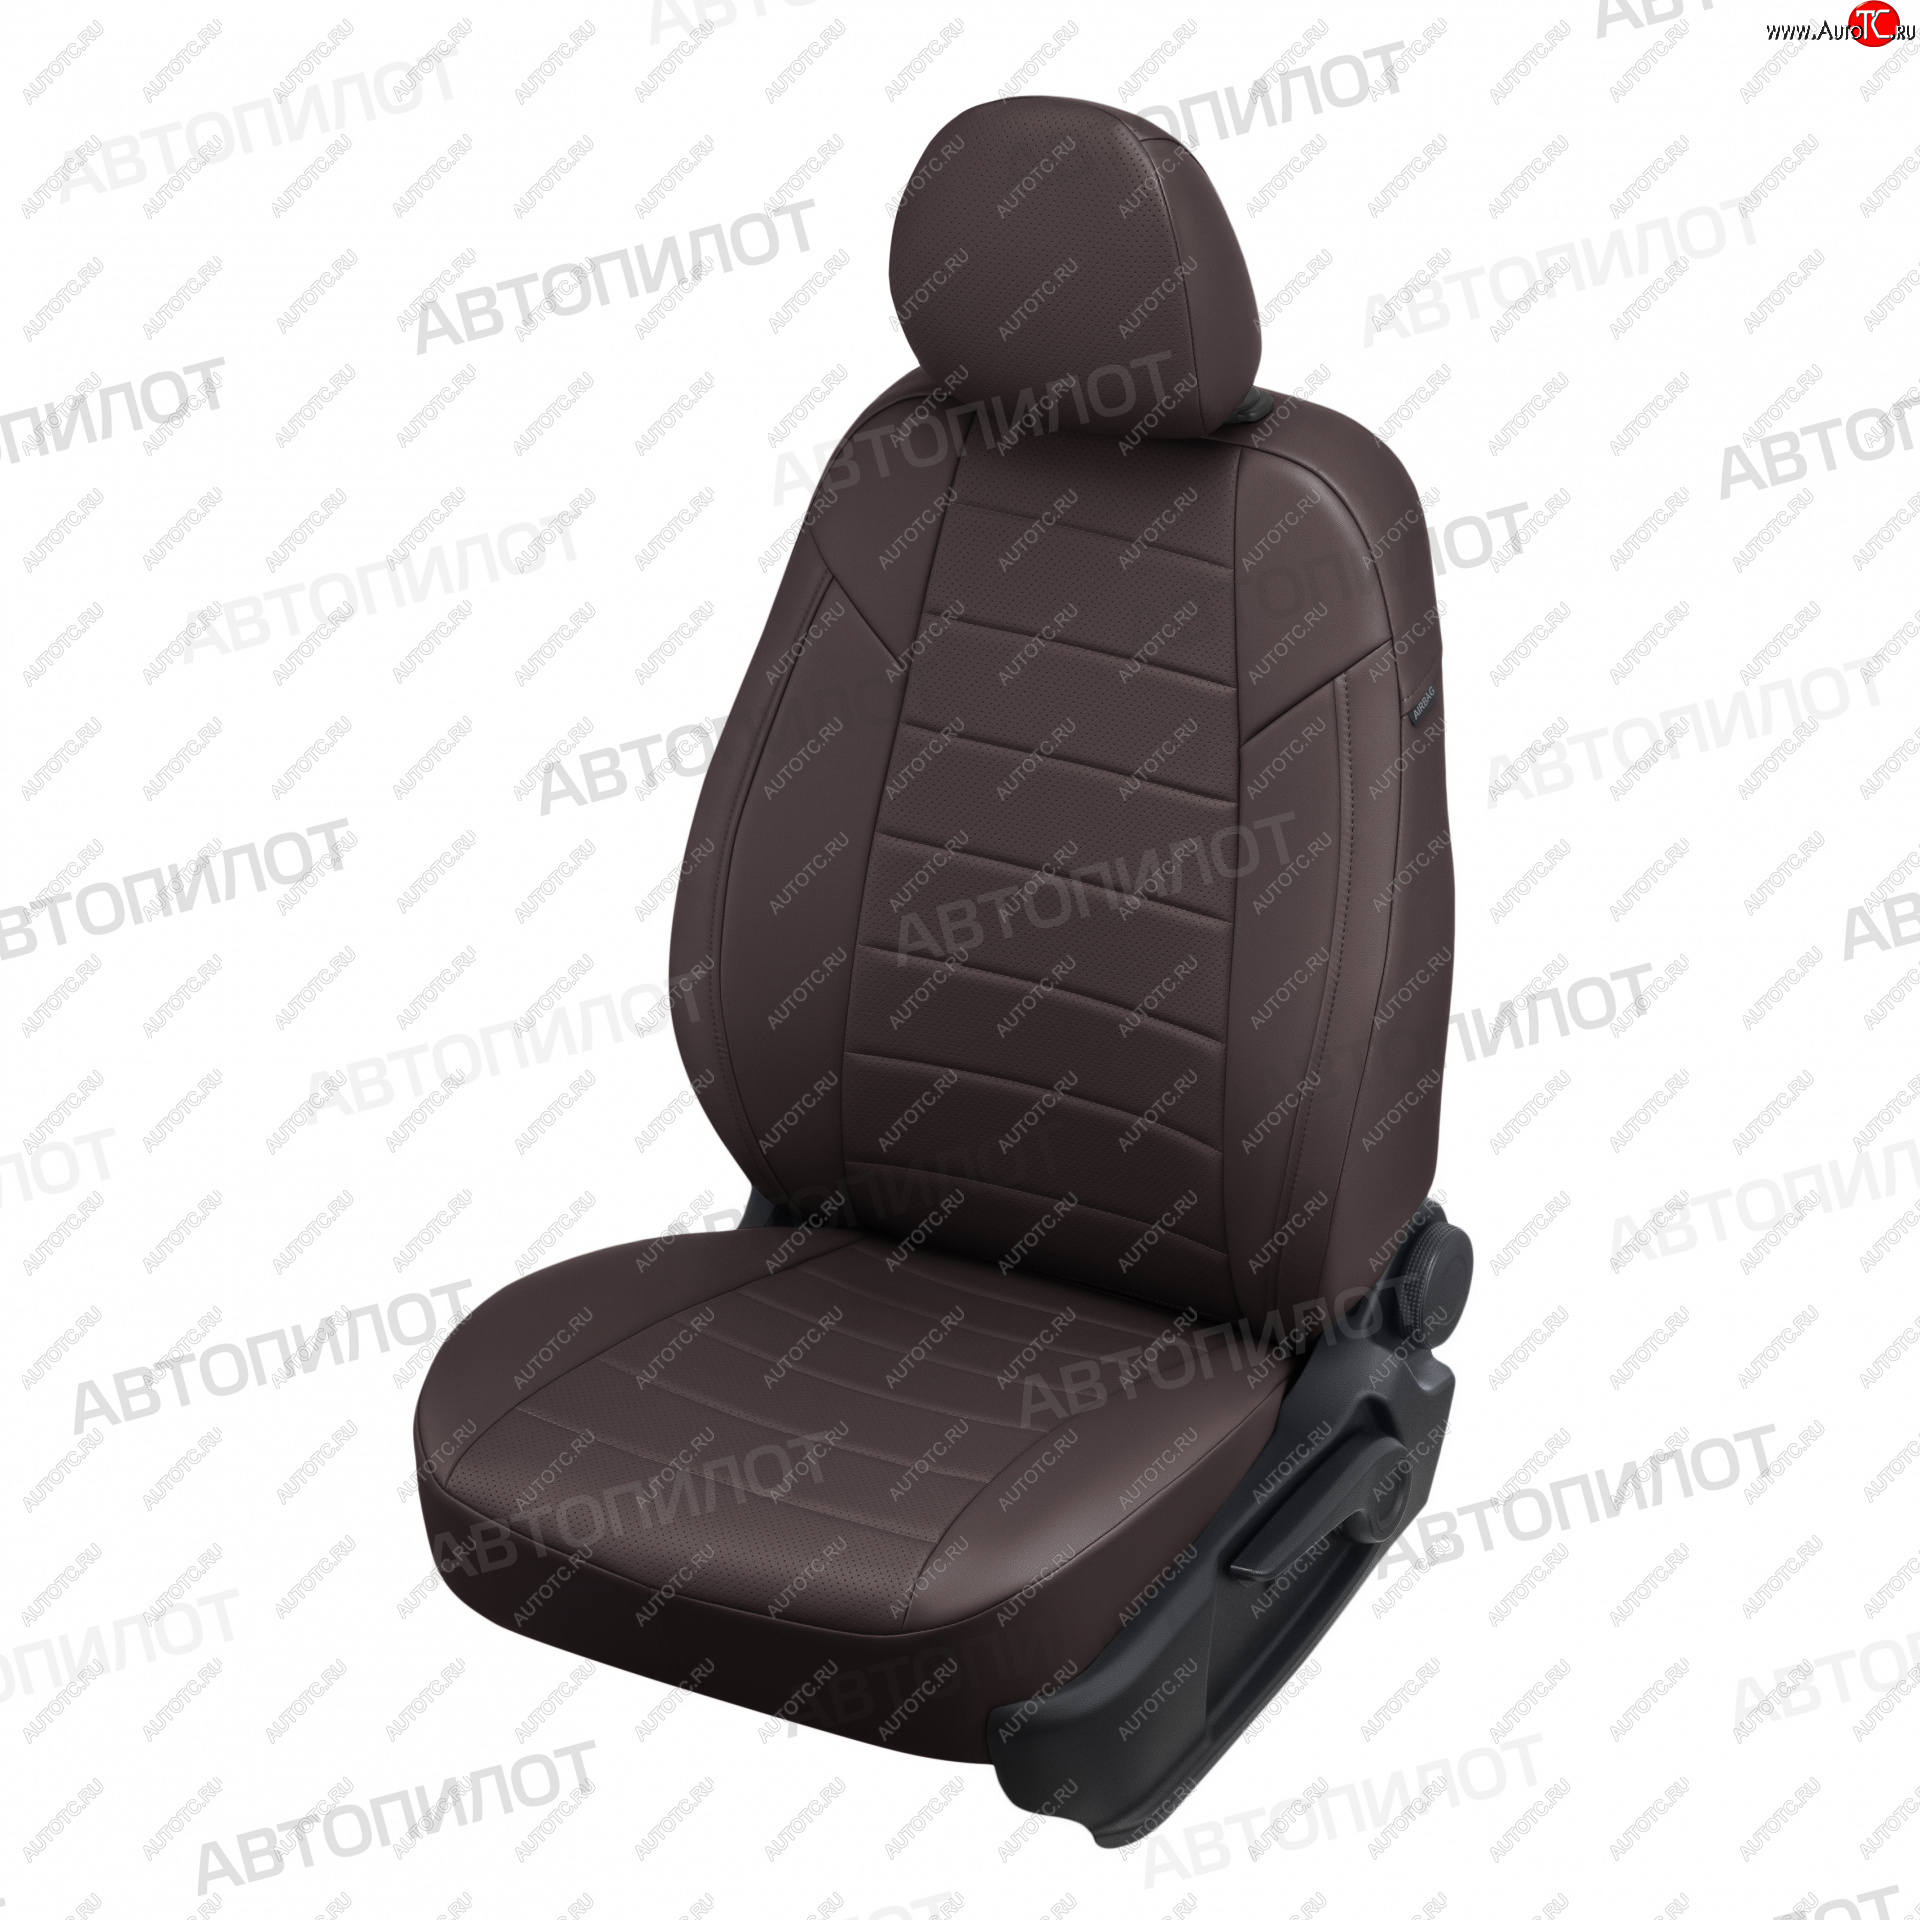 13 449 р. Чехлы сидений (экокожа, 40/60) Автопилот  Volkswagen Polo  9N1 (2001-2009) (шоколад)